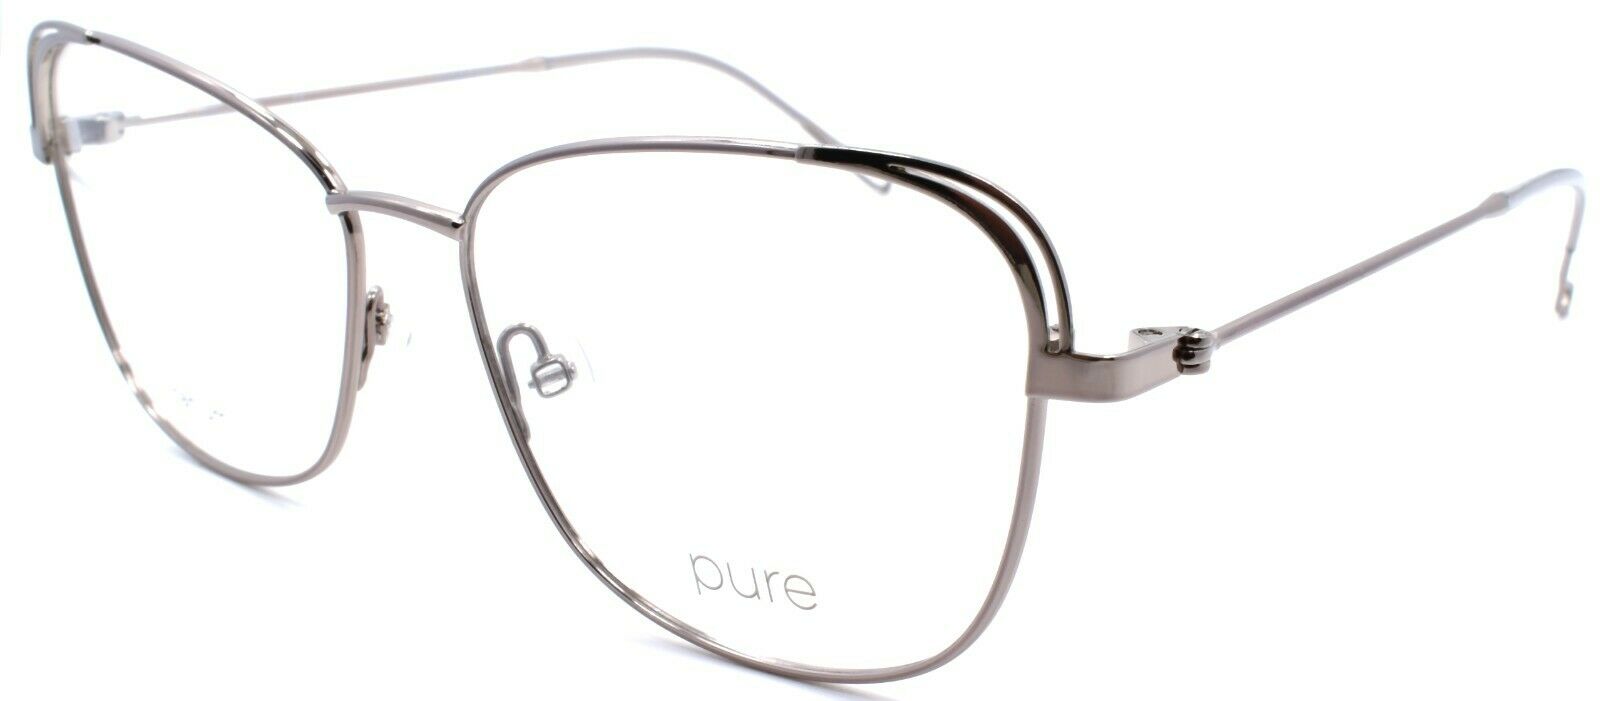 1-Airlock Pure P-5008 070 Women's Eyeglasses Titanium 54-15-145 Light Gunmetal-886895514521-IKSpecs